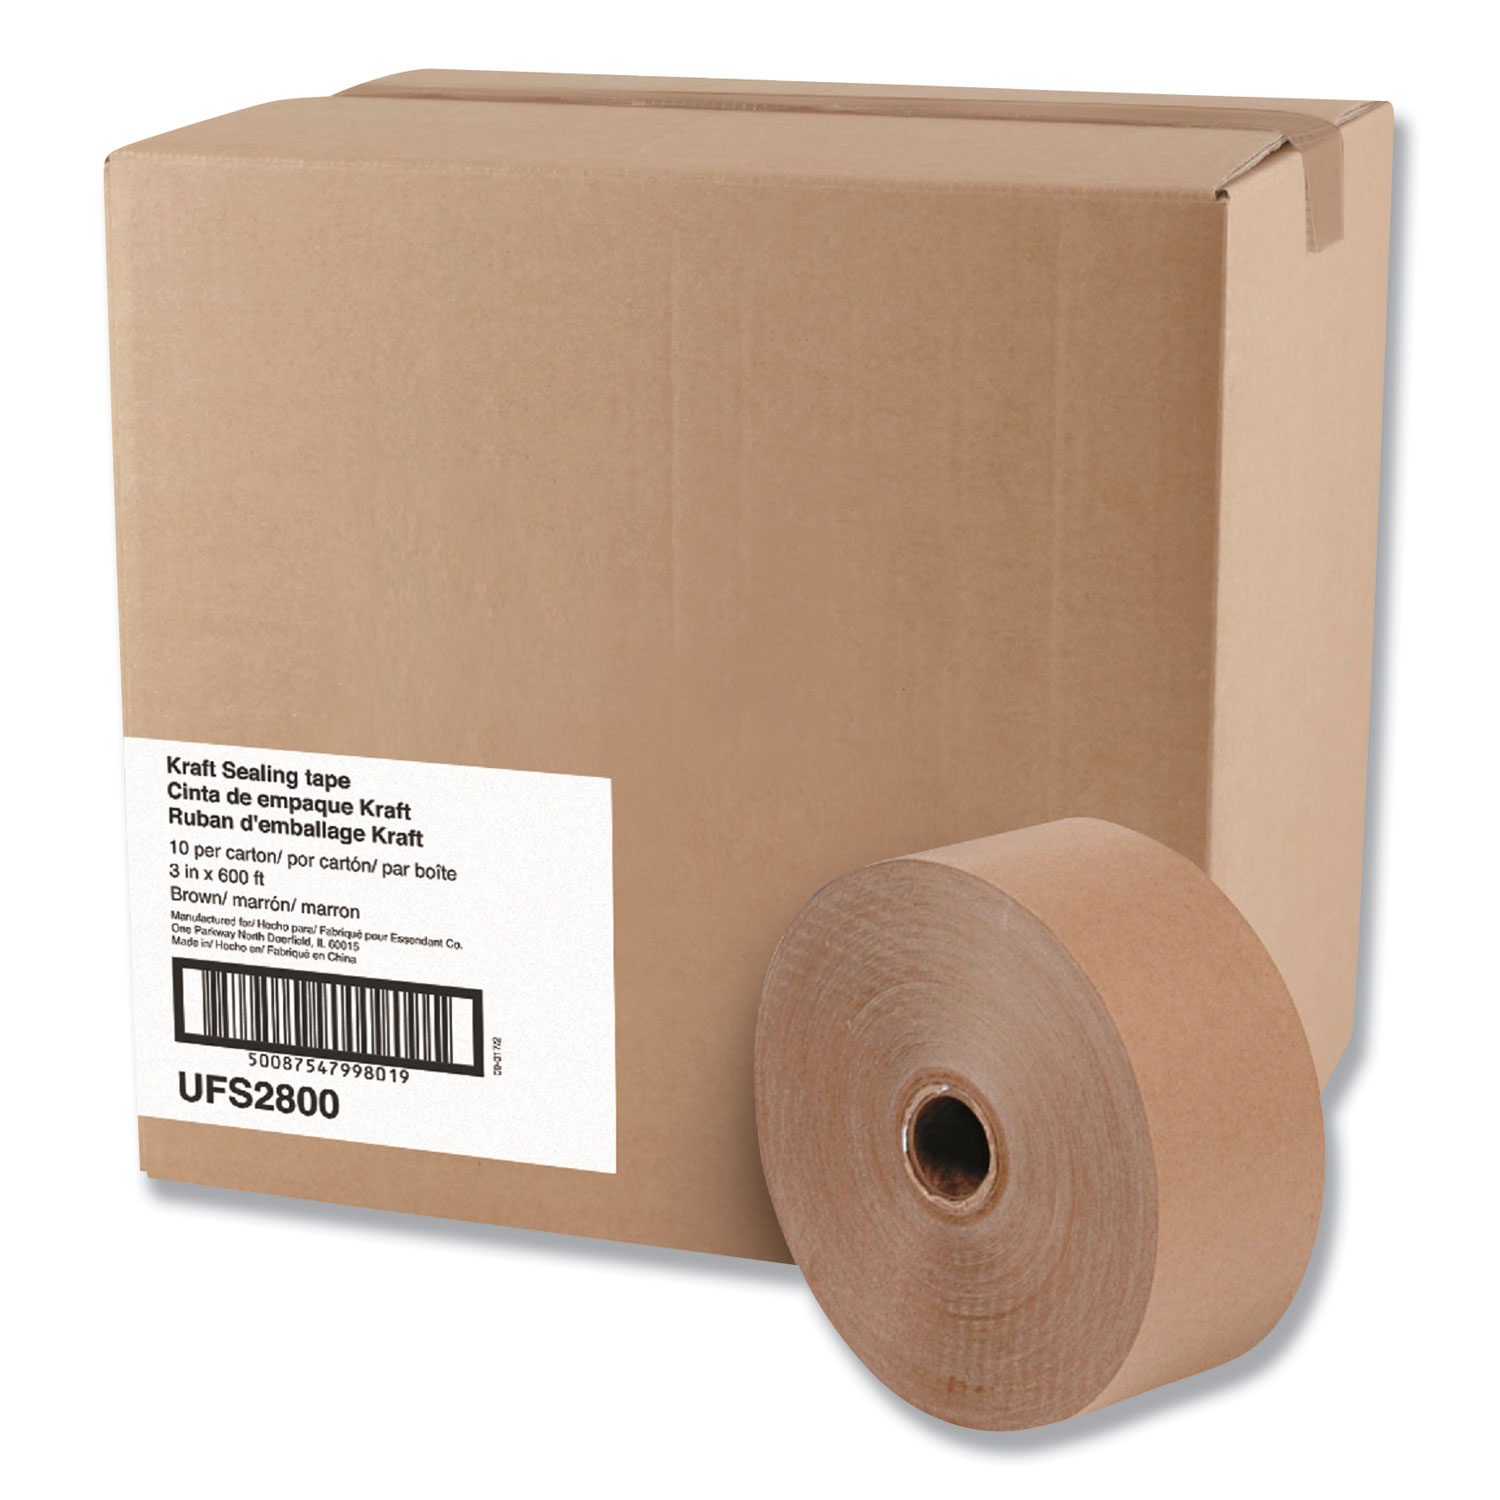  General Supply UFS2800 Gummed Kraft Sealing Tape, 3 Core, 3 x 600 ft, Brown, 10/Carton (UNV2800) 